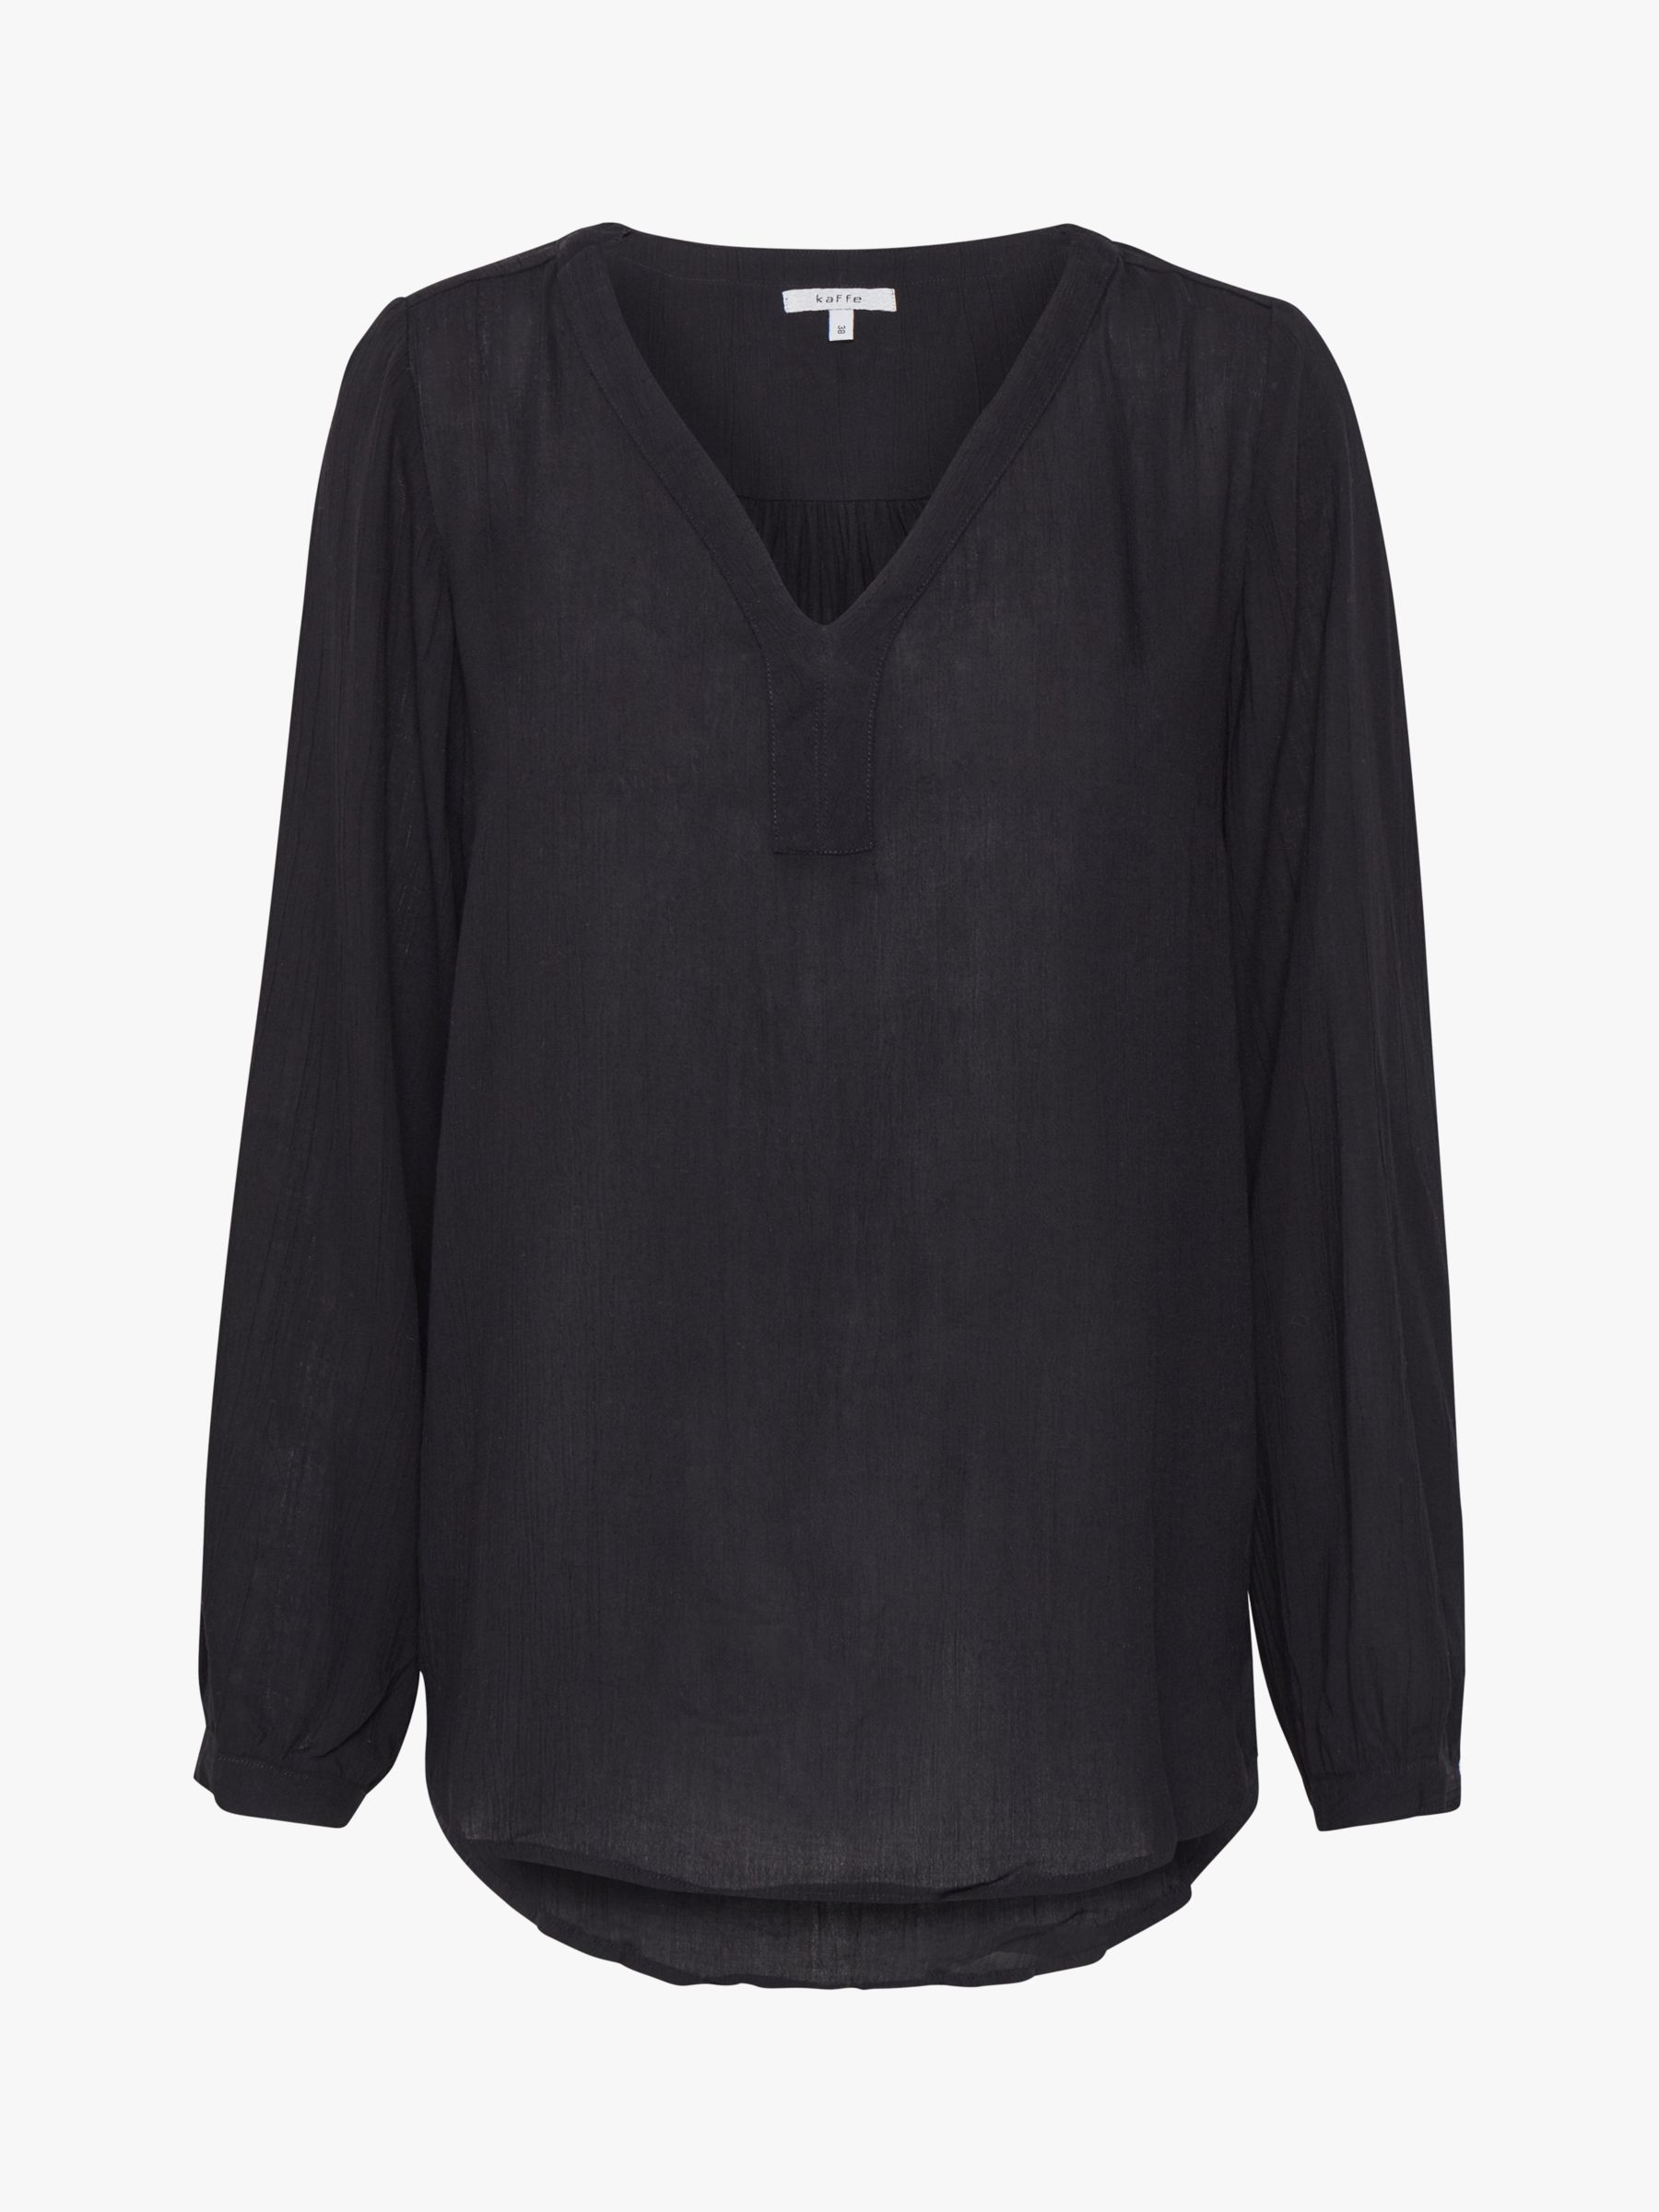 KAFFE Янтарная блузка с V-образным вырезом, черная